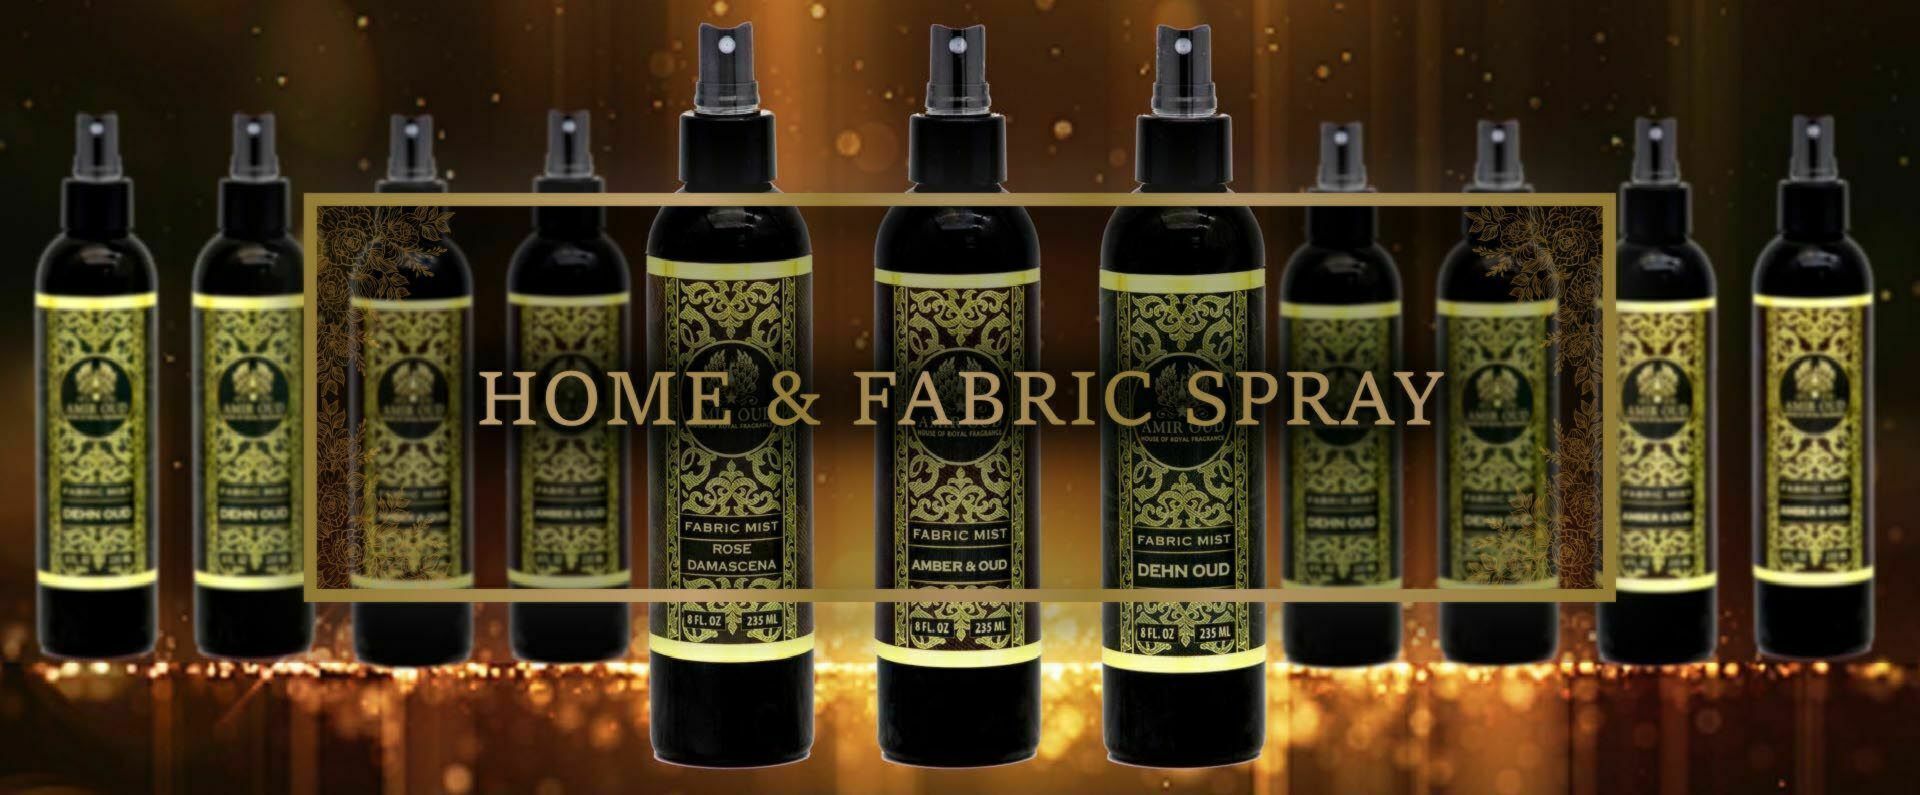 Home & Fabric Spray